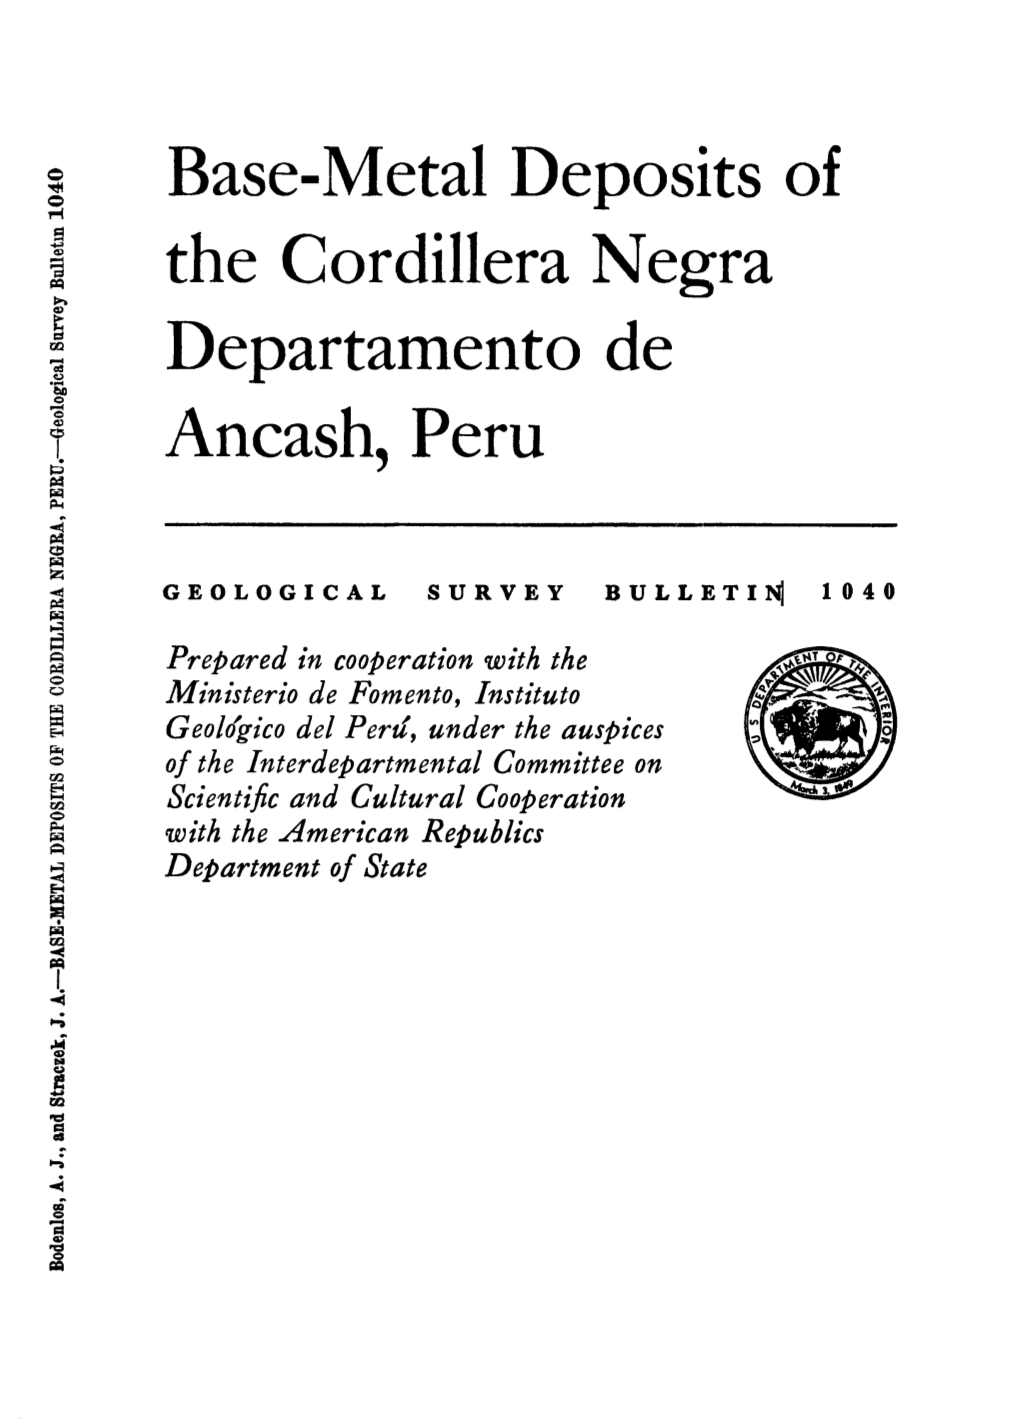 Base-Metal Deposits of the Cordillera Negra Departamento De Ancash, Peru